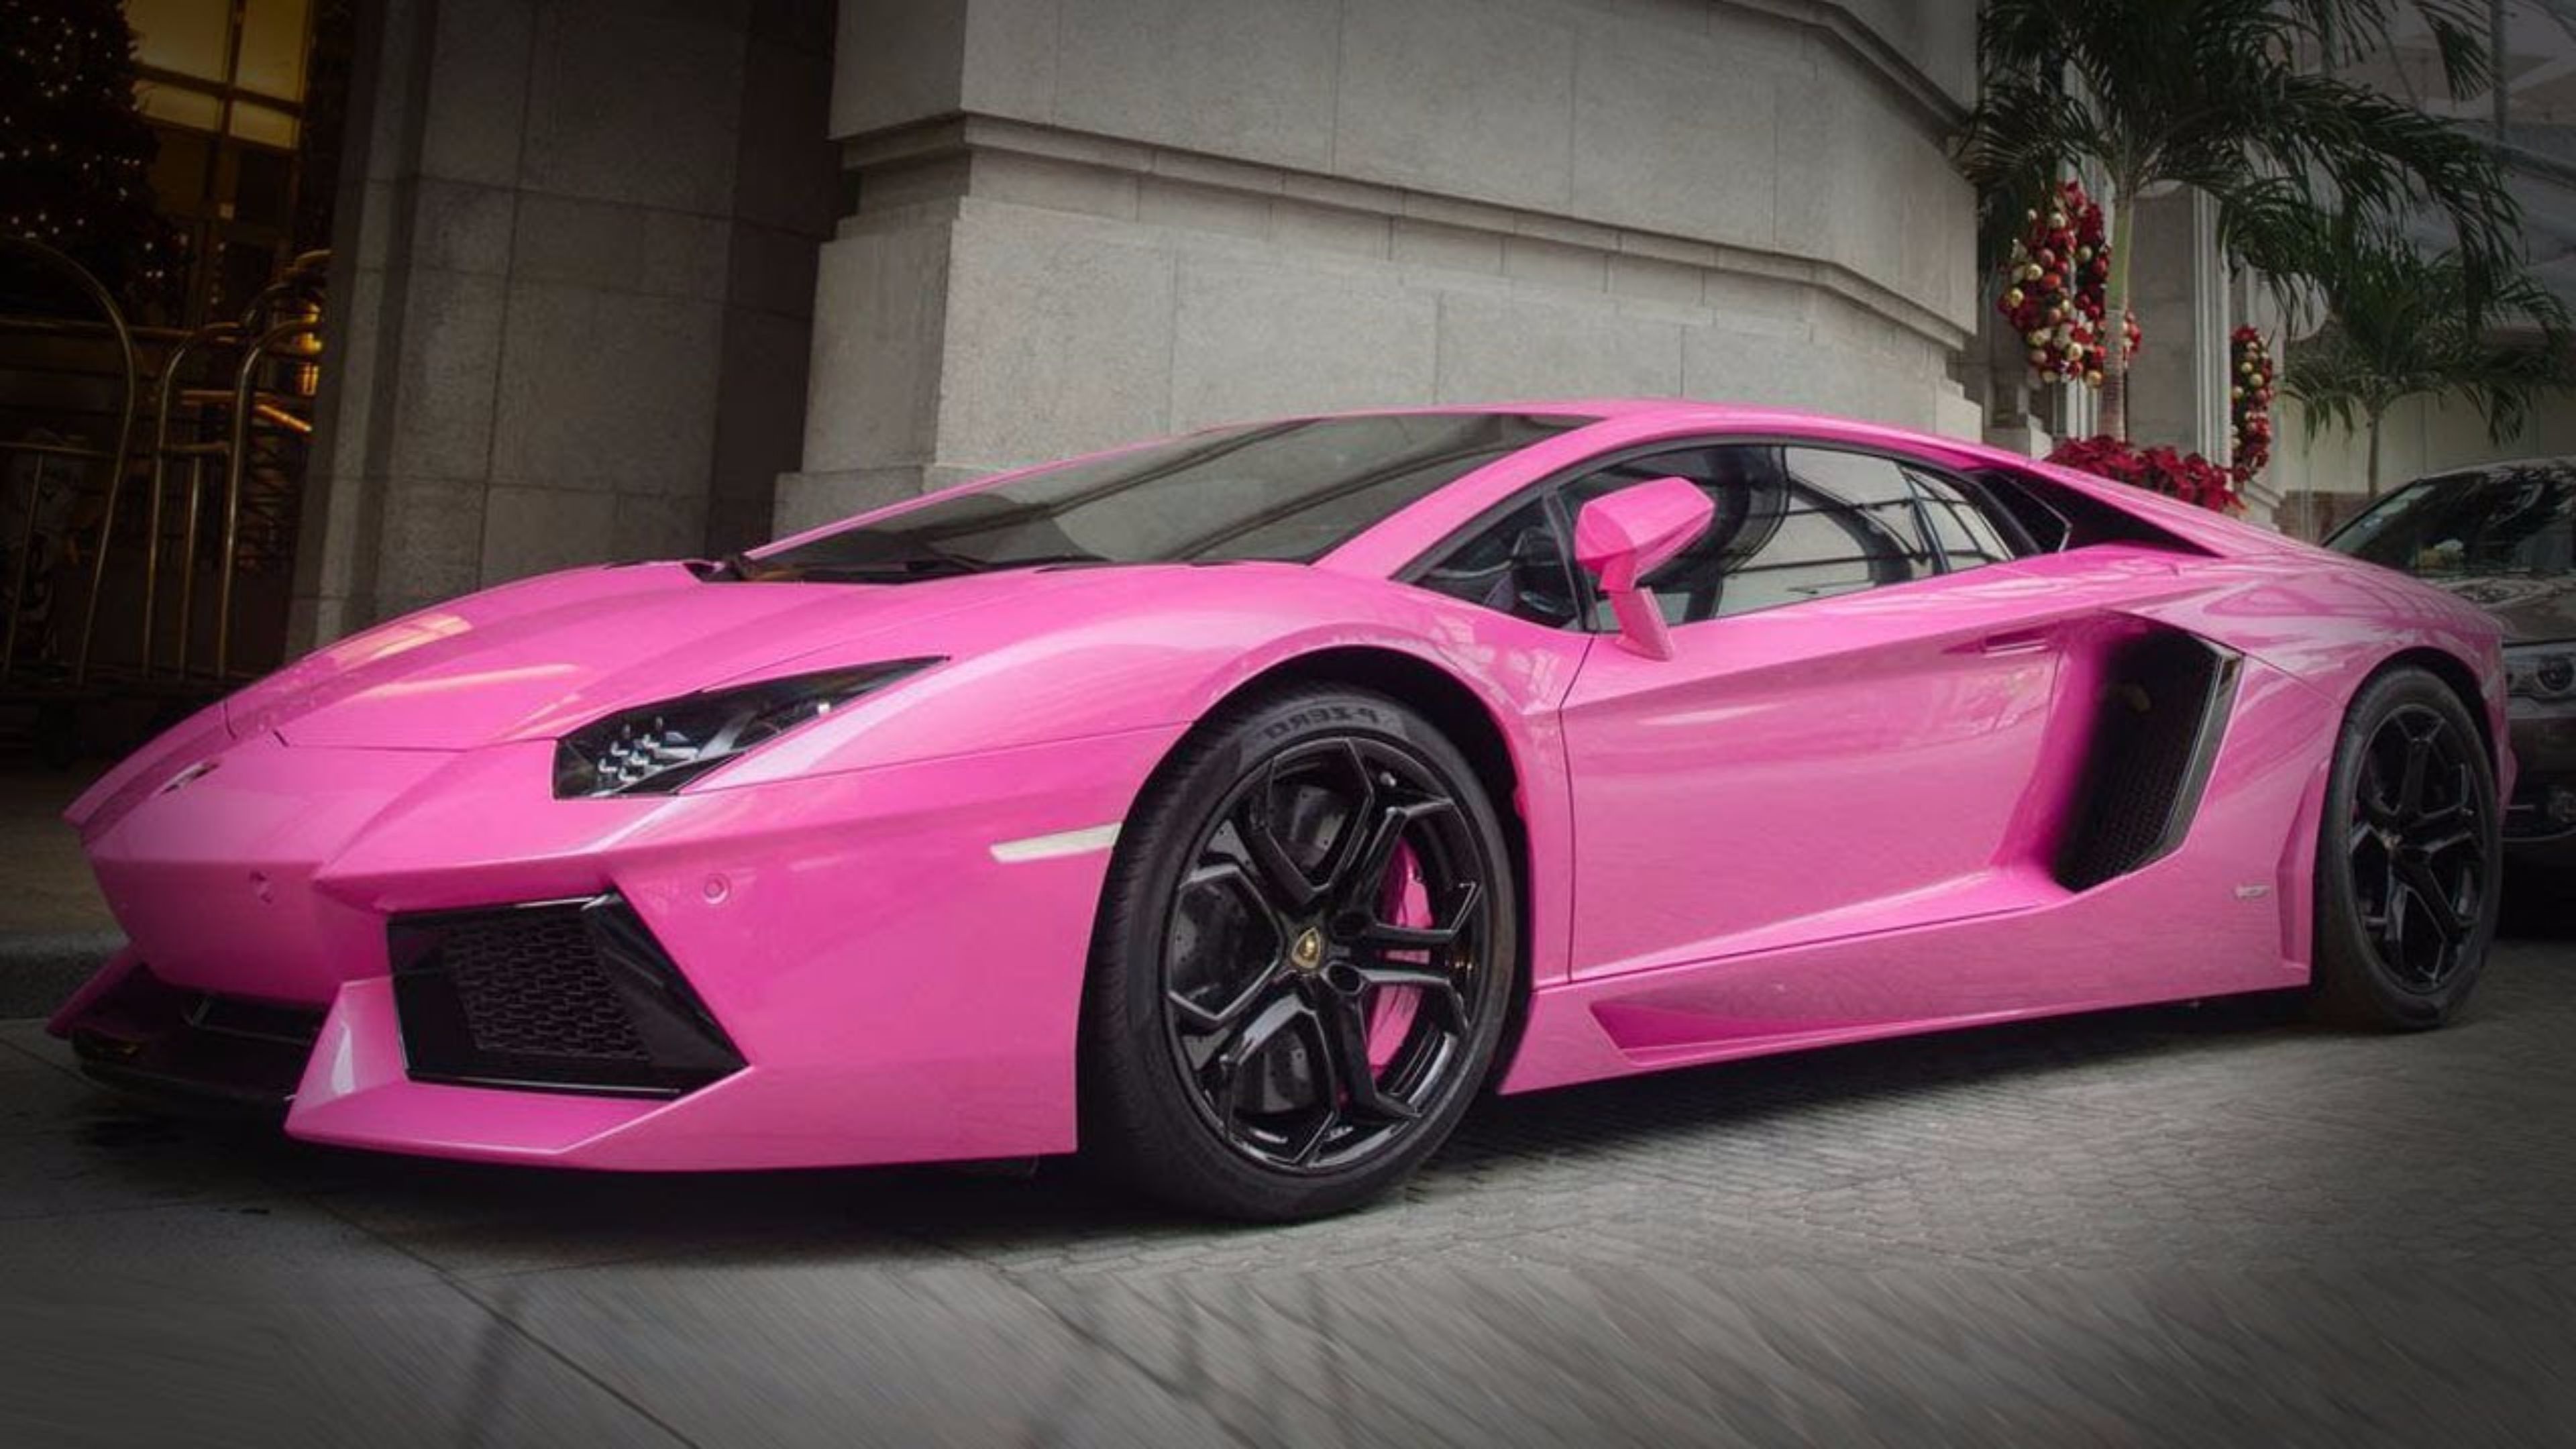 3840x2160 Pink Lamborghini Wallpaper.